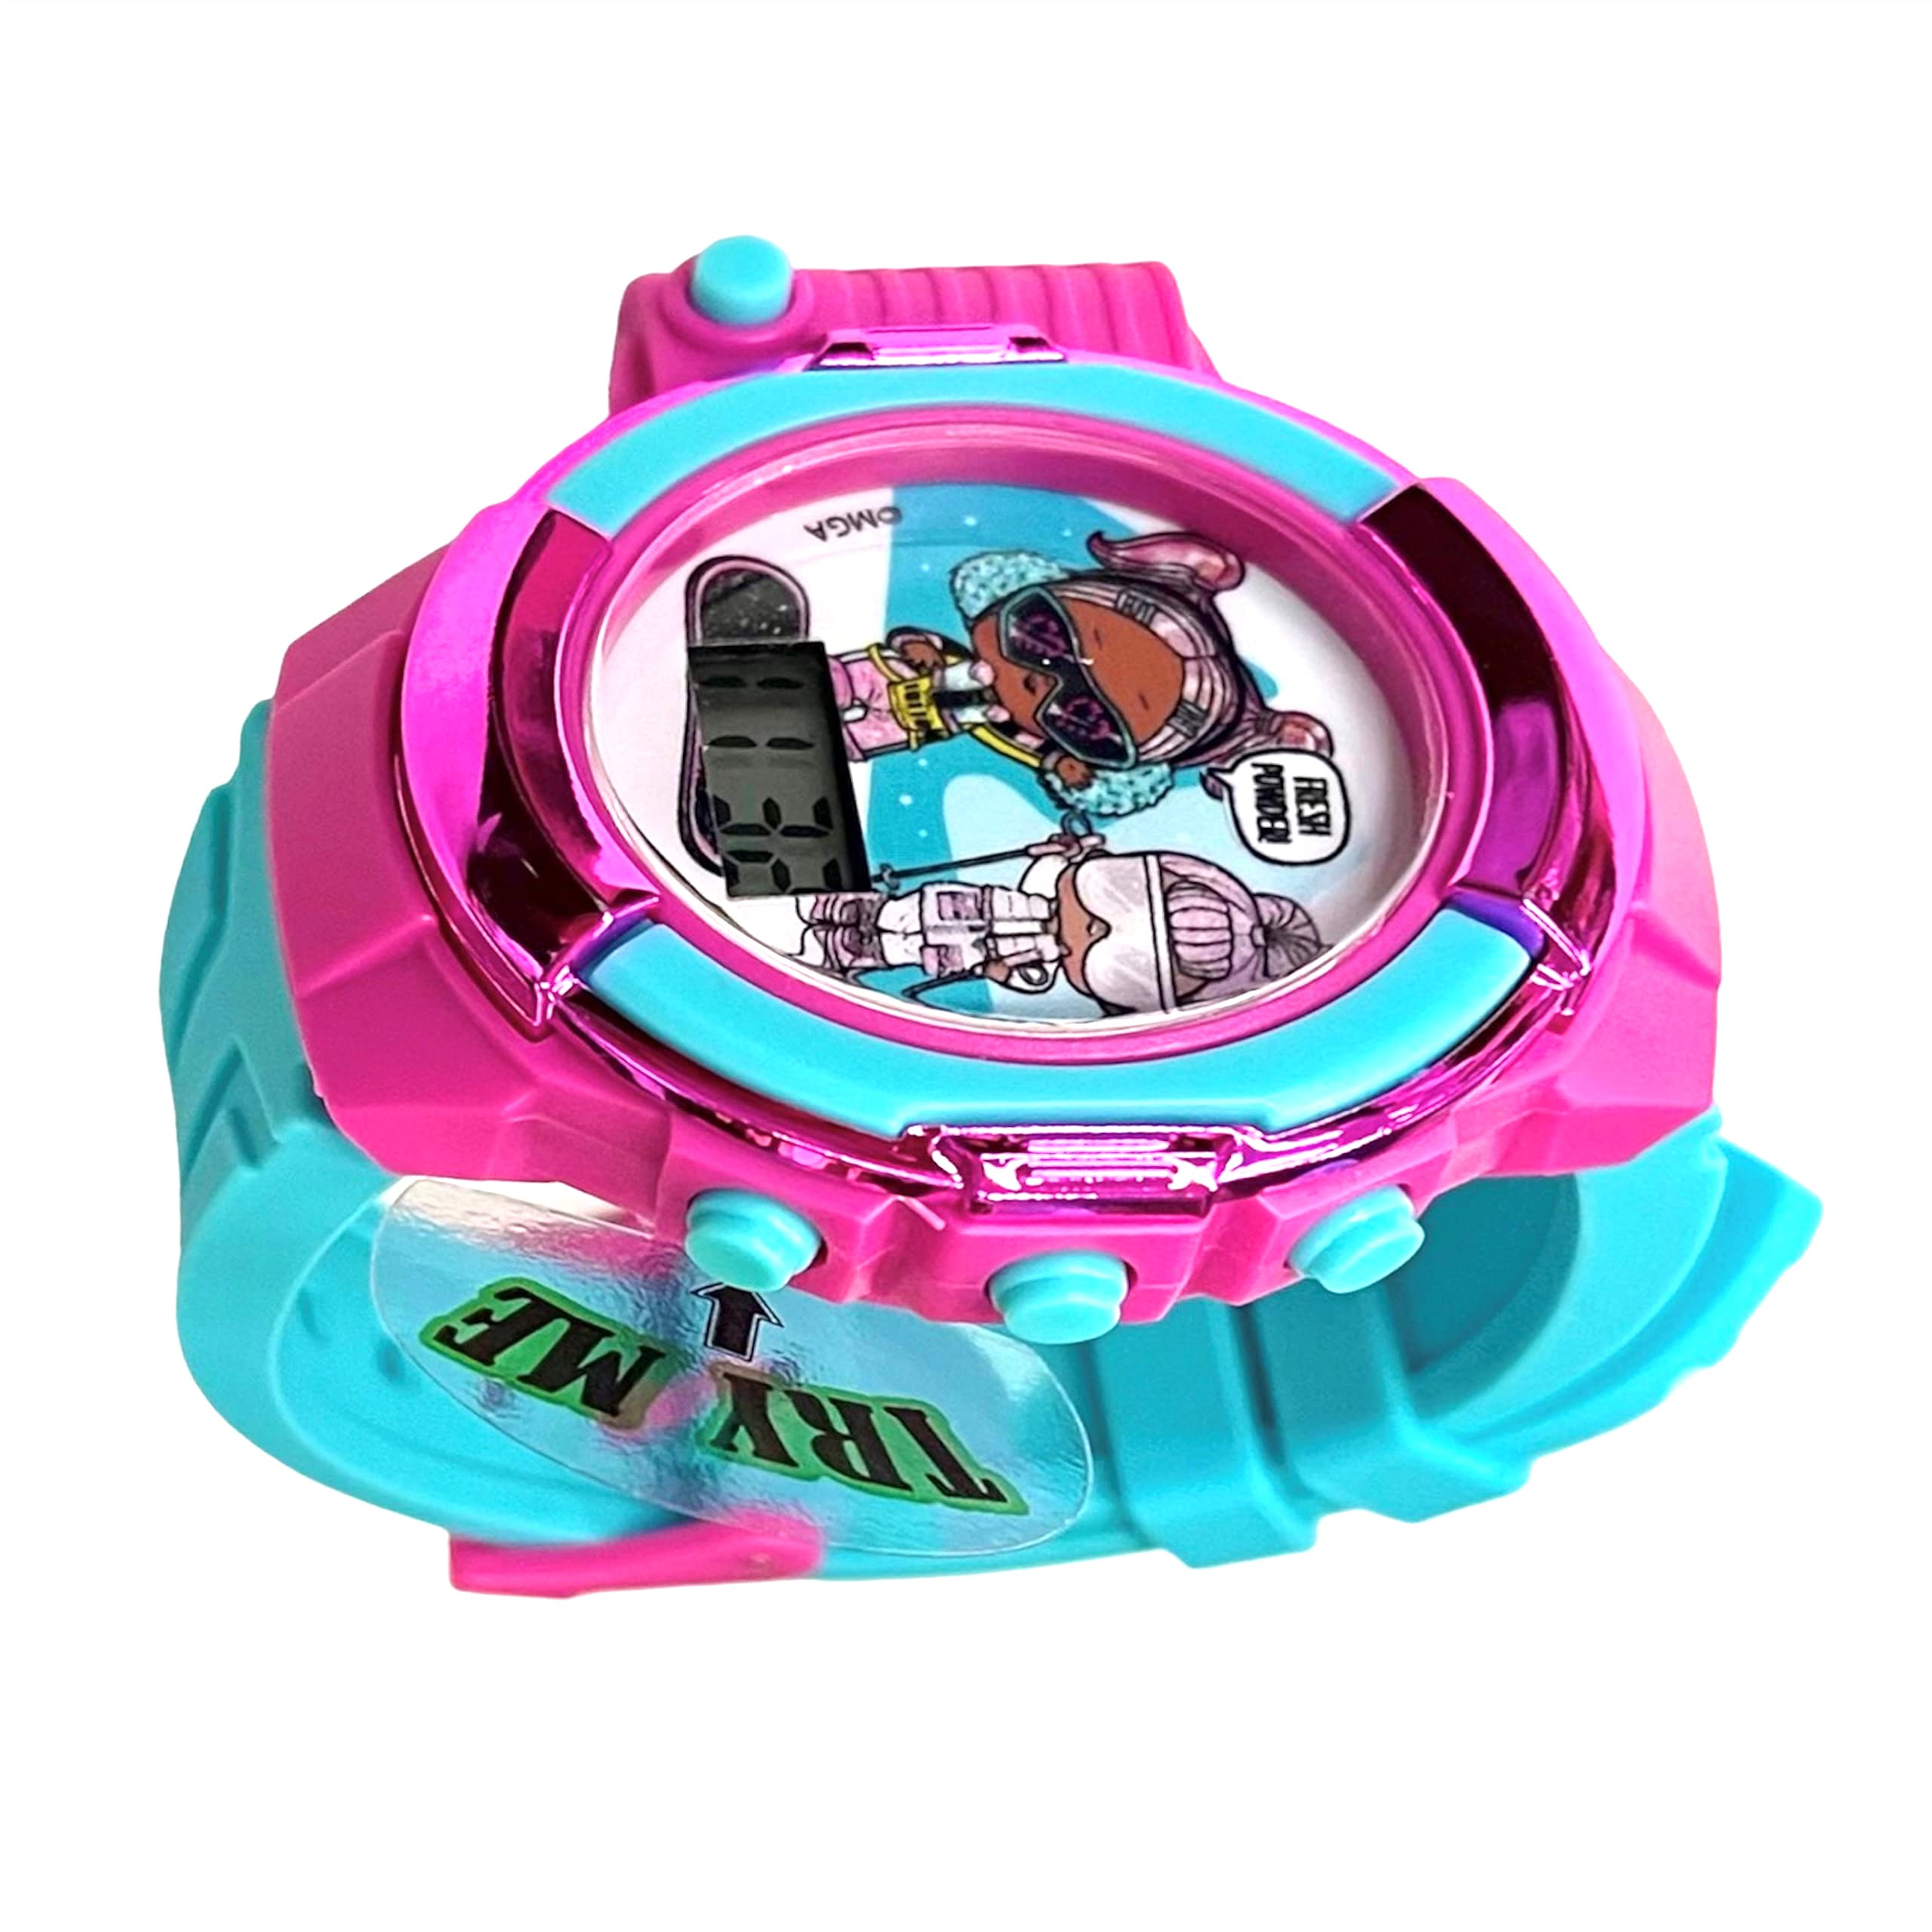 Accutime Kids MGA LOL Surprise Pink & Turquoise Digital LCD Quartz Wrist Watch with Flashlight, Turquoise Strap for Girls, Boys, Kids (Model: LOL4661AZ)